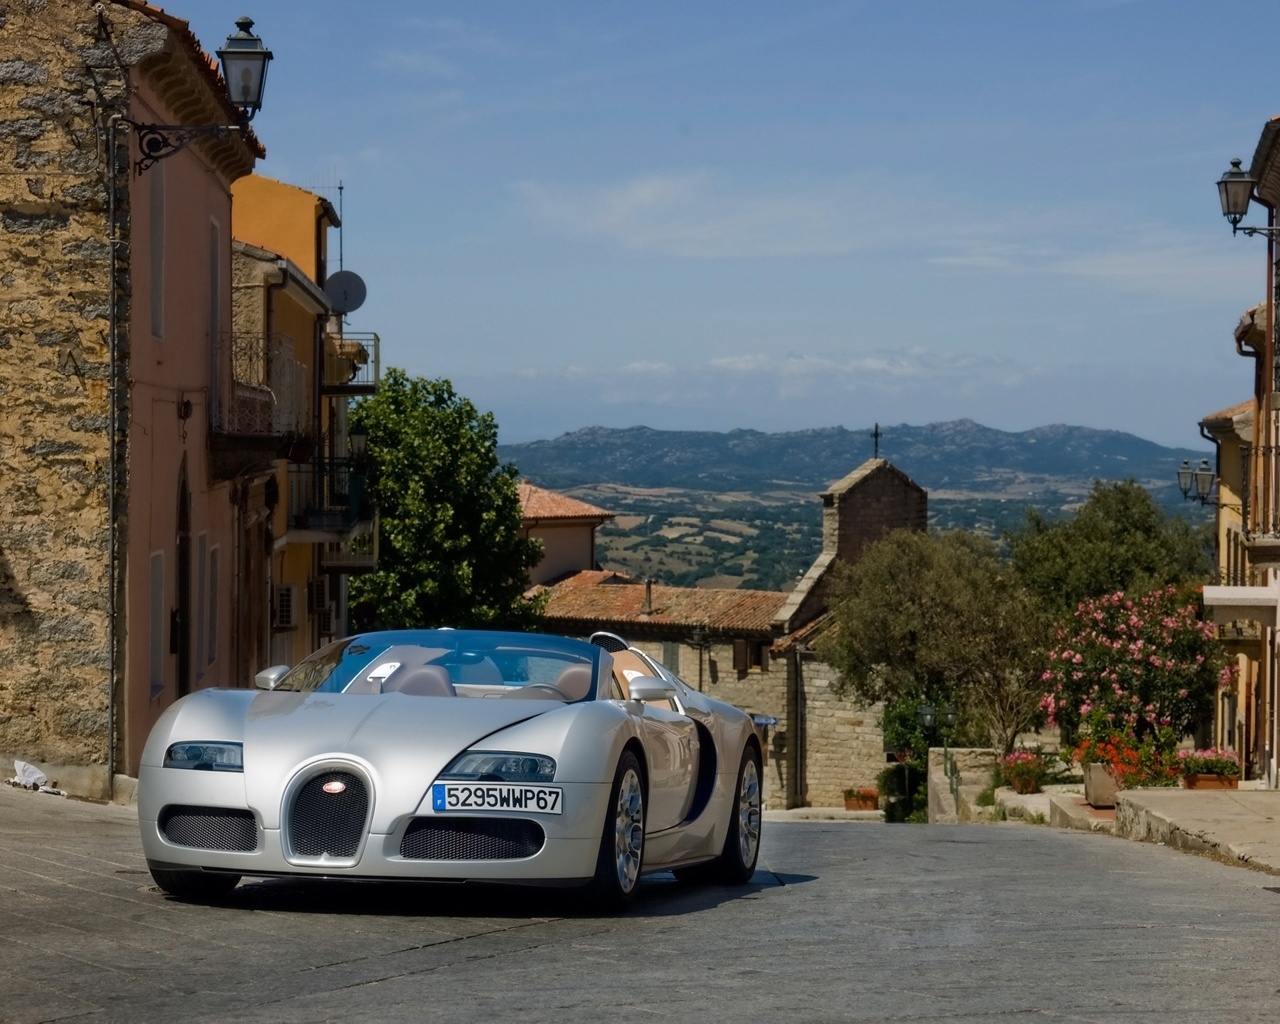 Bugatti Veyron 16.4 Grand Sport 2010 in Sardinia - Front Angle for 1280 x 1024 resolution